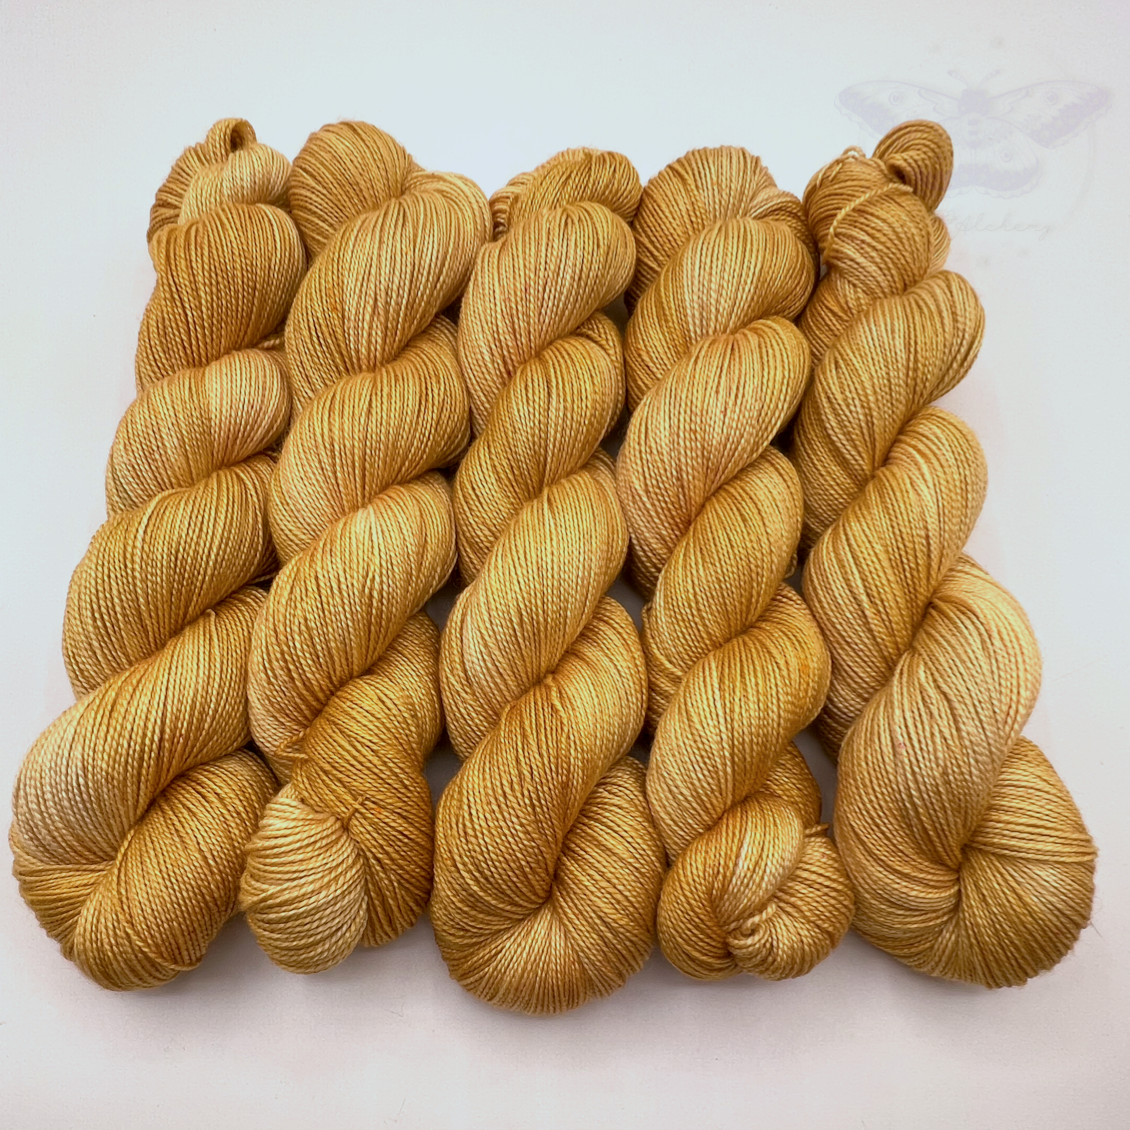 HAYRIDE SilkSock yarn